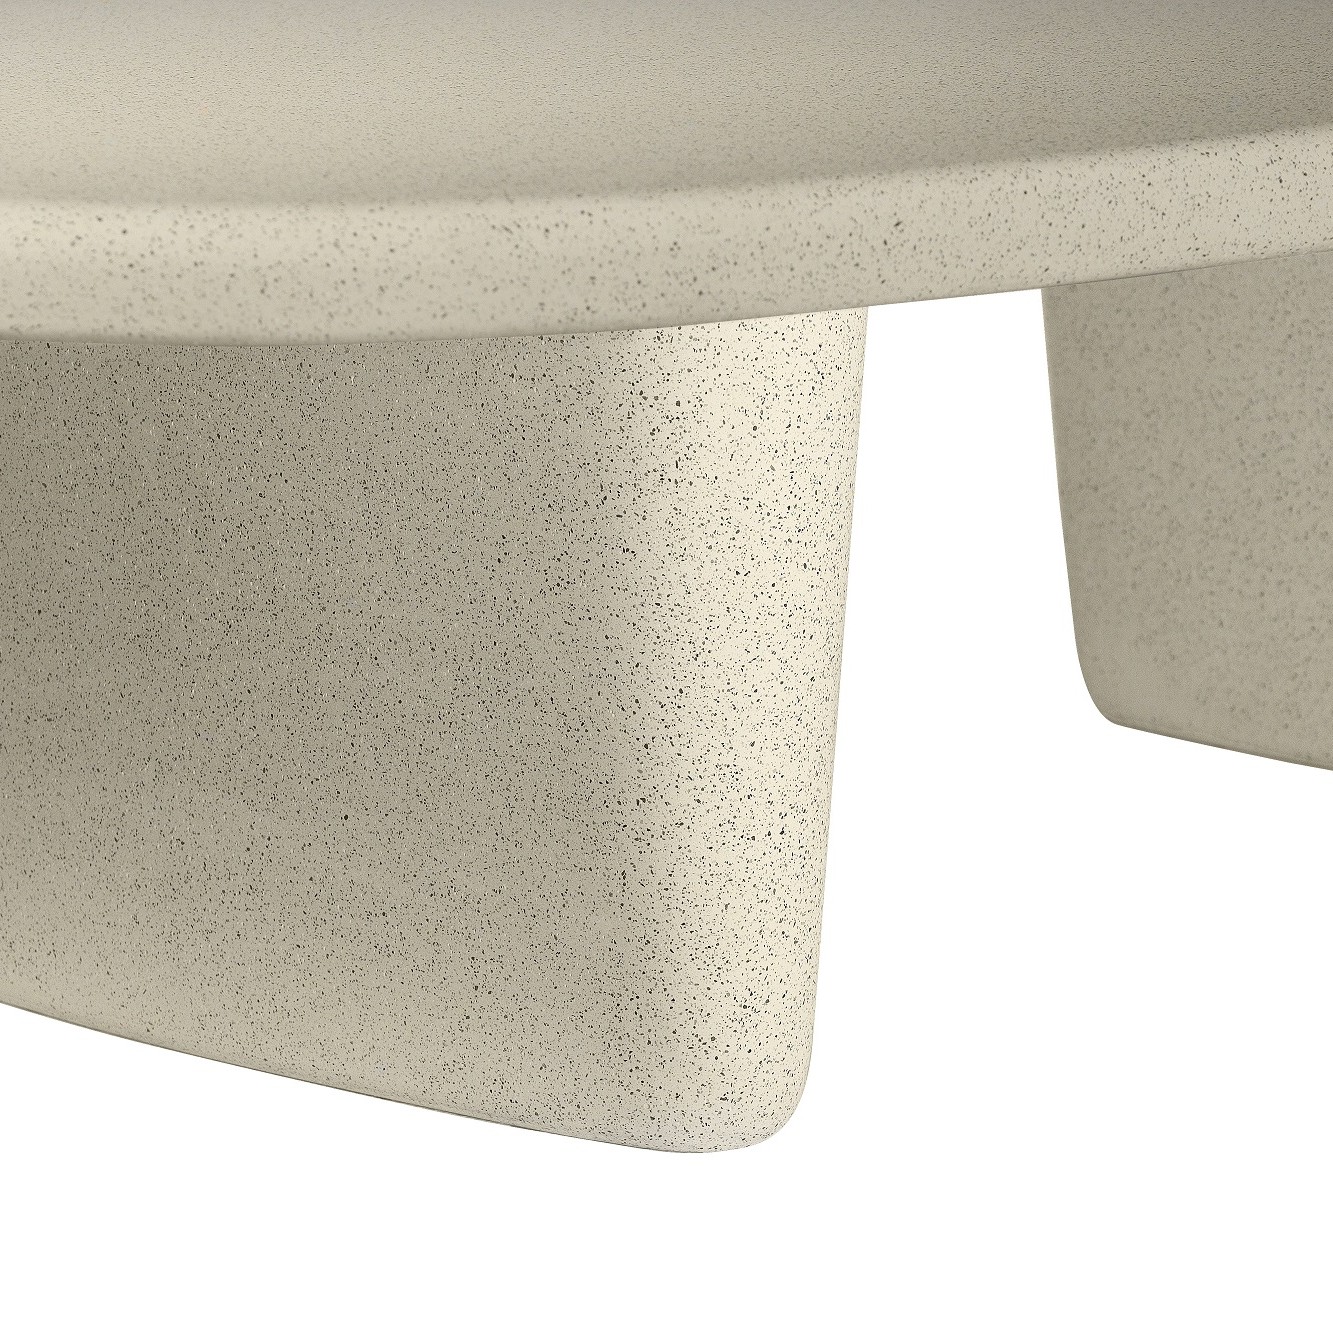 Mes amo concrete coffee table by Urbi et orbi low res